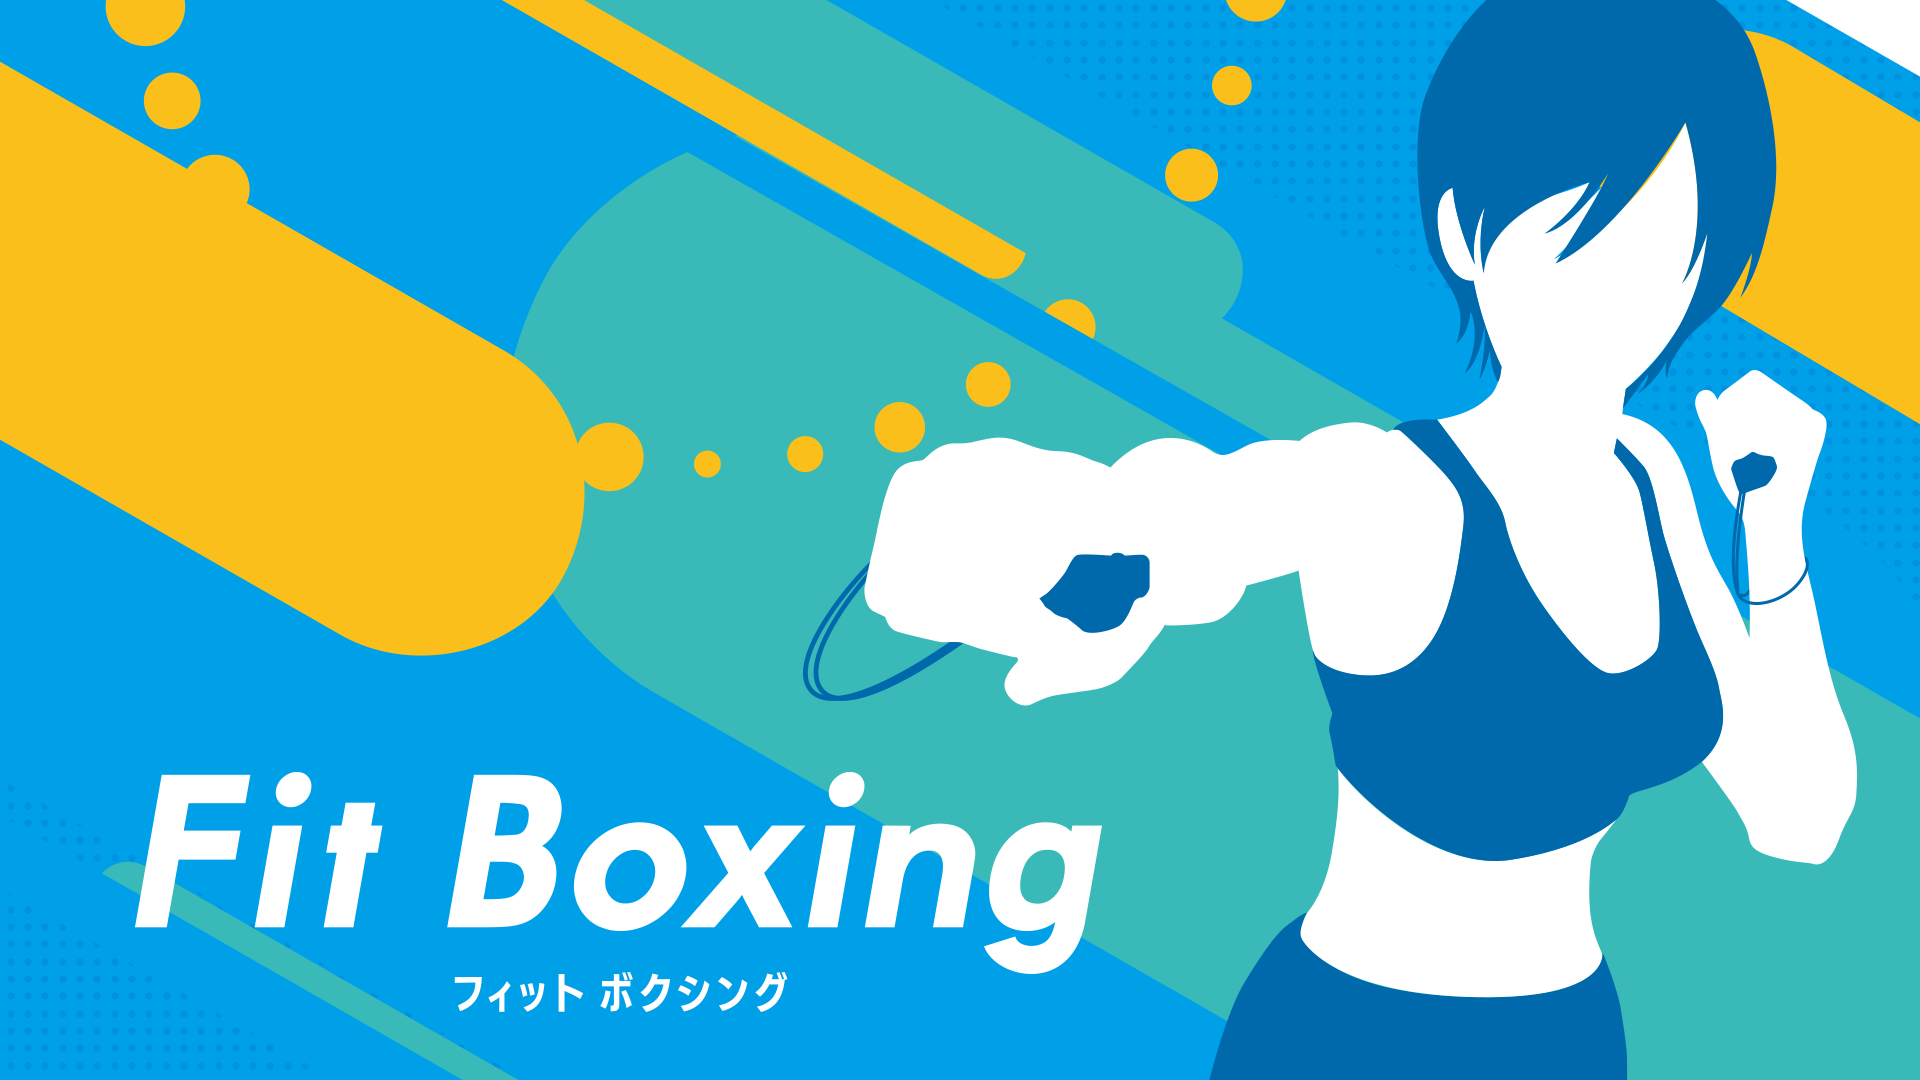 Фит бокс. Фитнес боксинг Нинтендо. Nintendo Switch Fit Boxing. Фит бокс ( Fit Box). Обложка на бокс и фитнес.